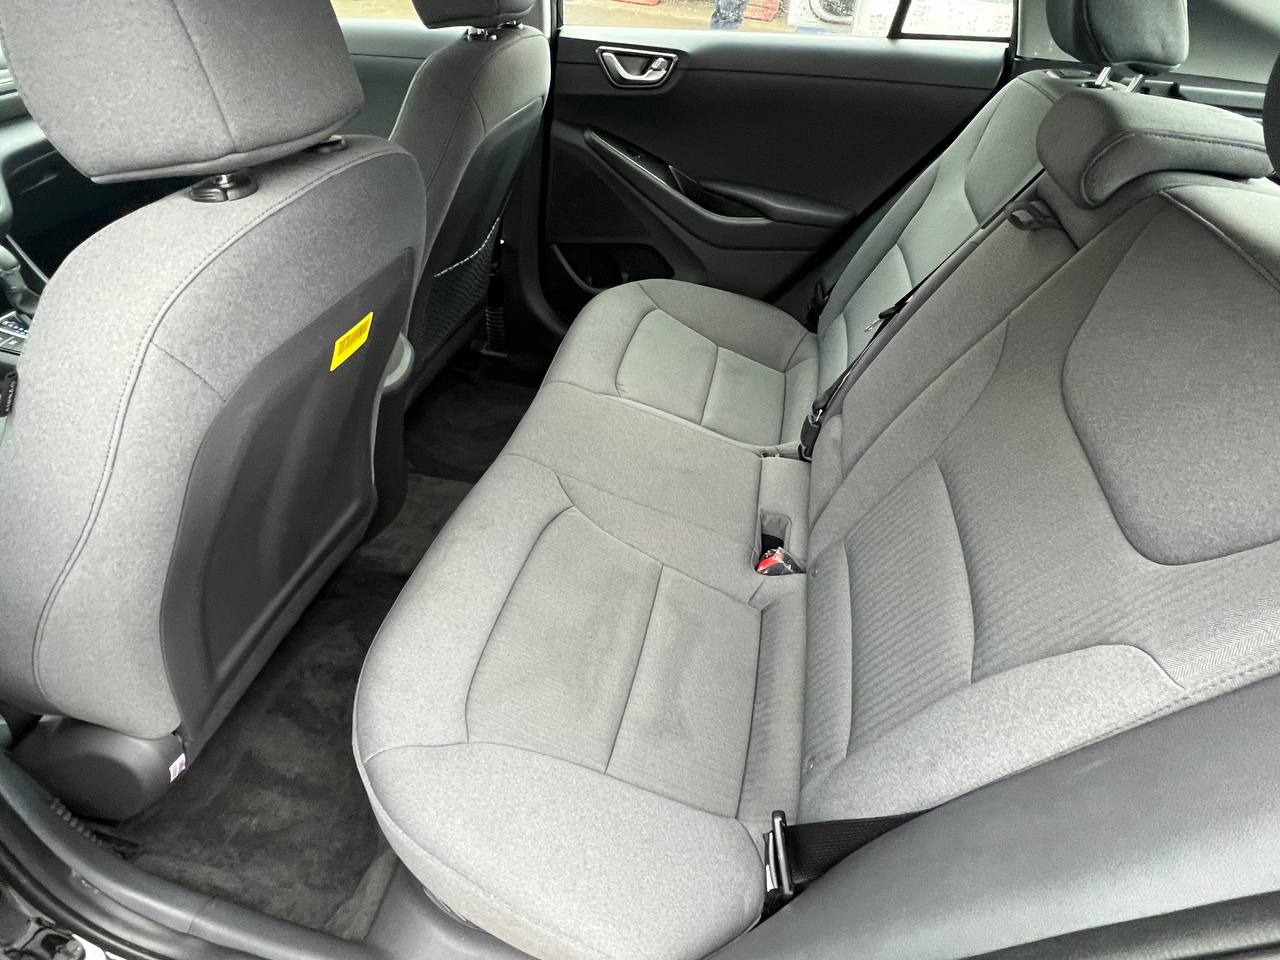 Used - Hyundai Ioniq Hybrid Hatchback for sale in Staten Island NY